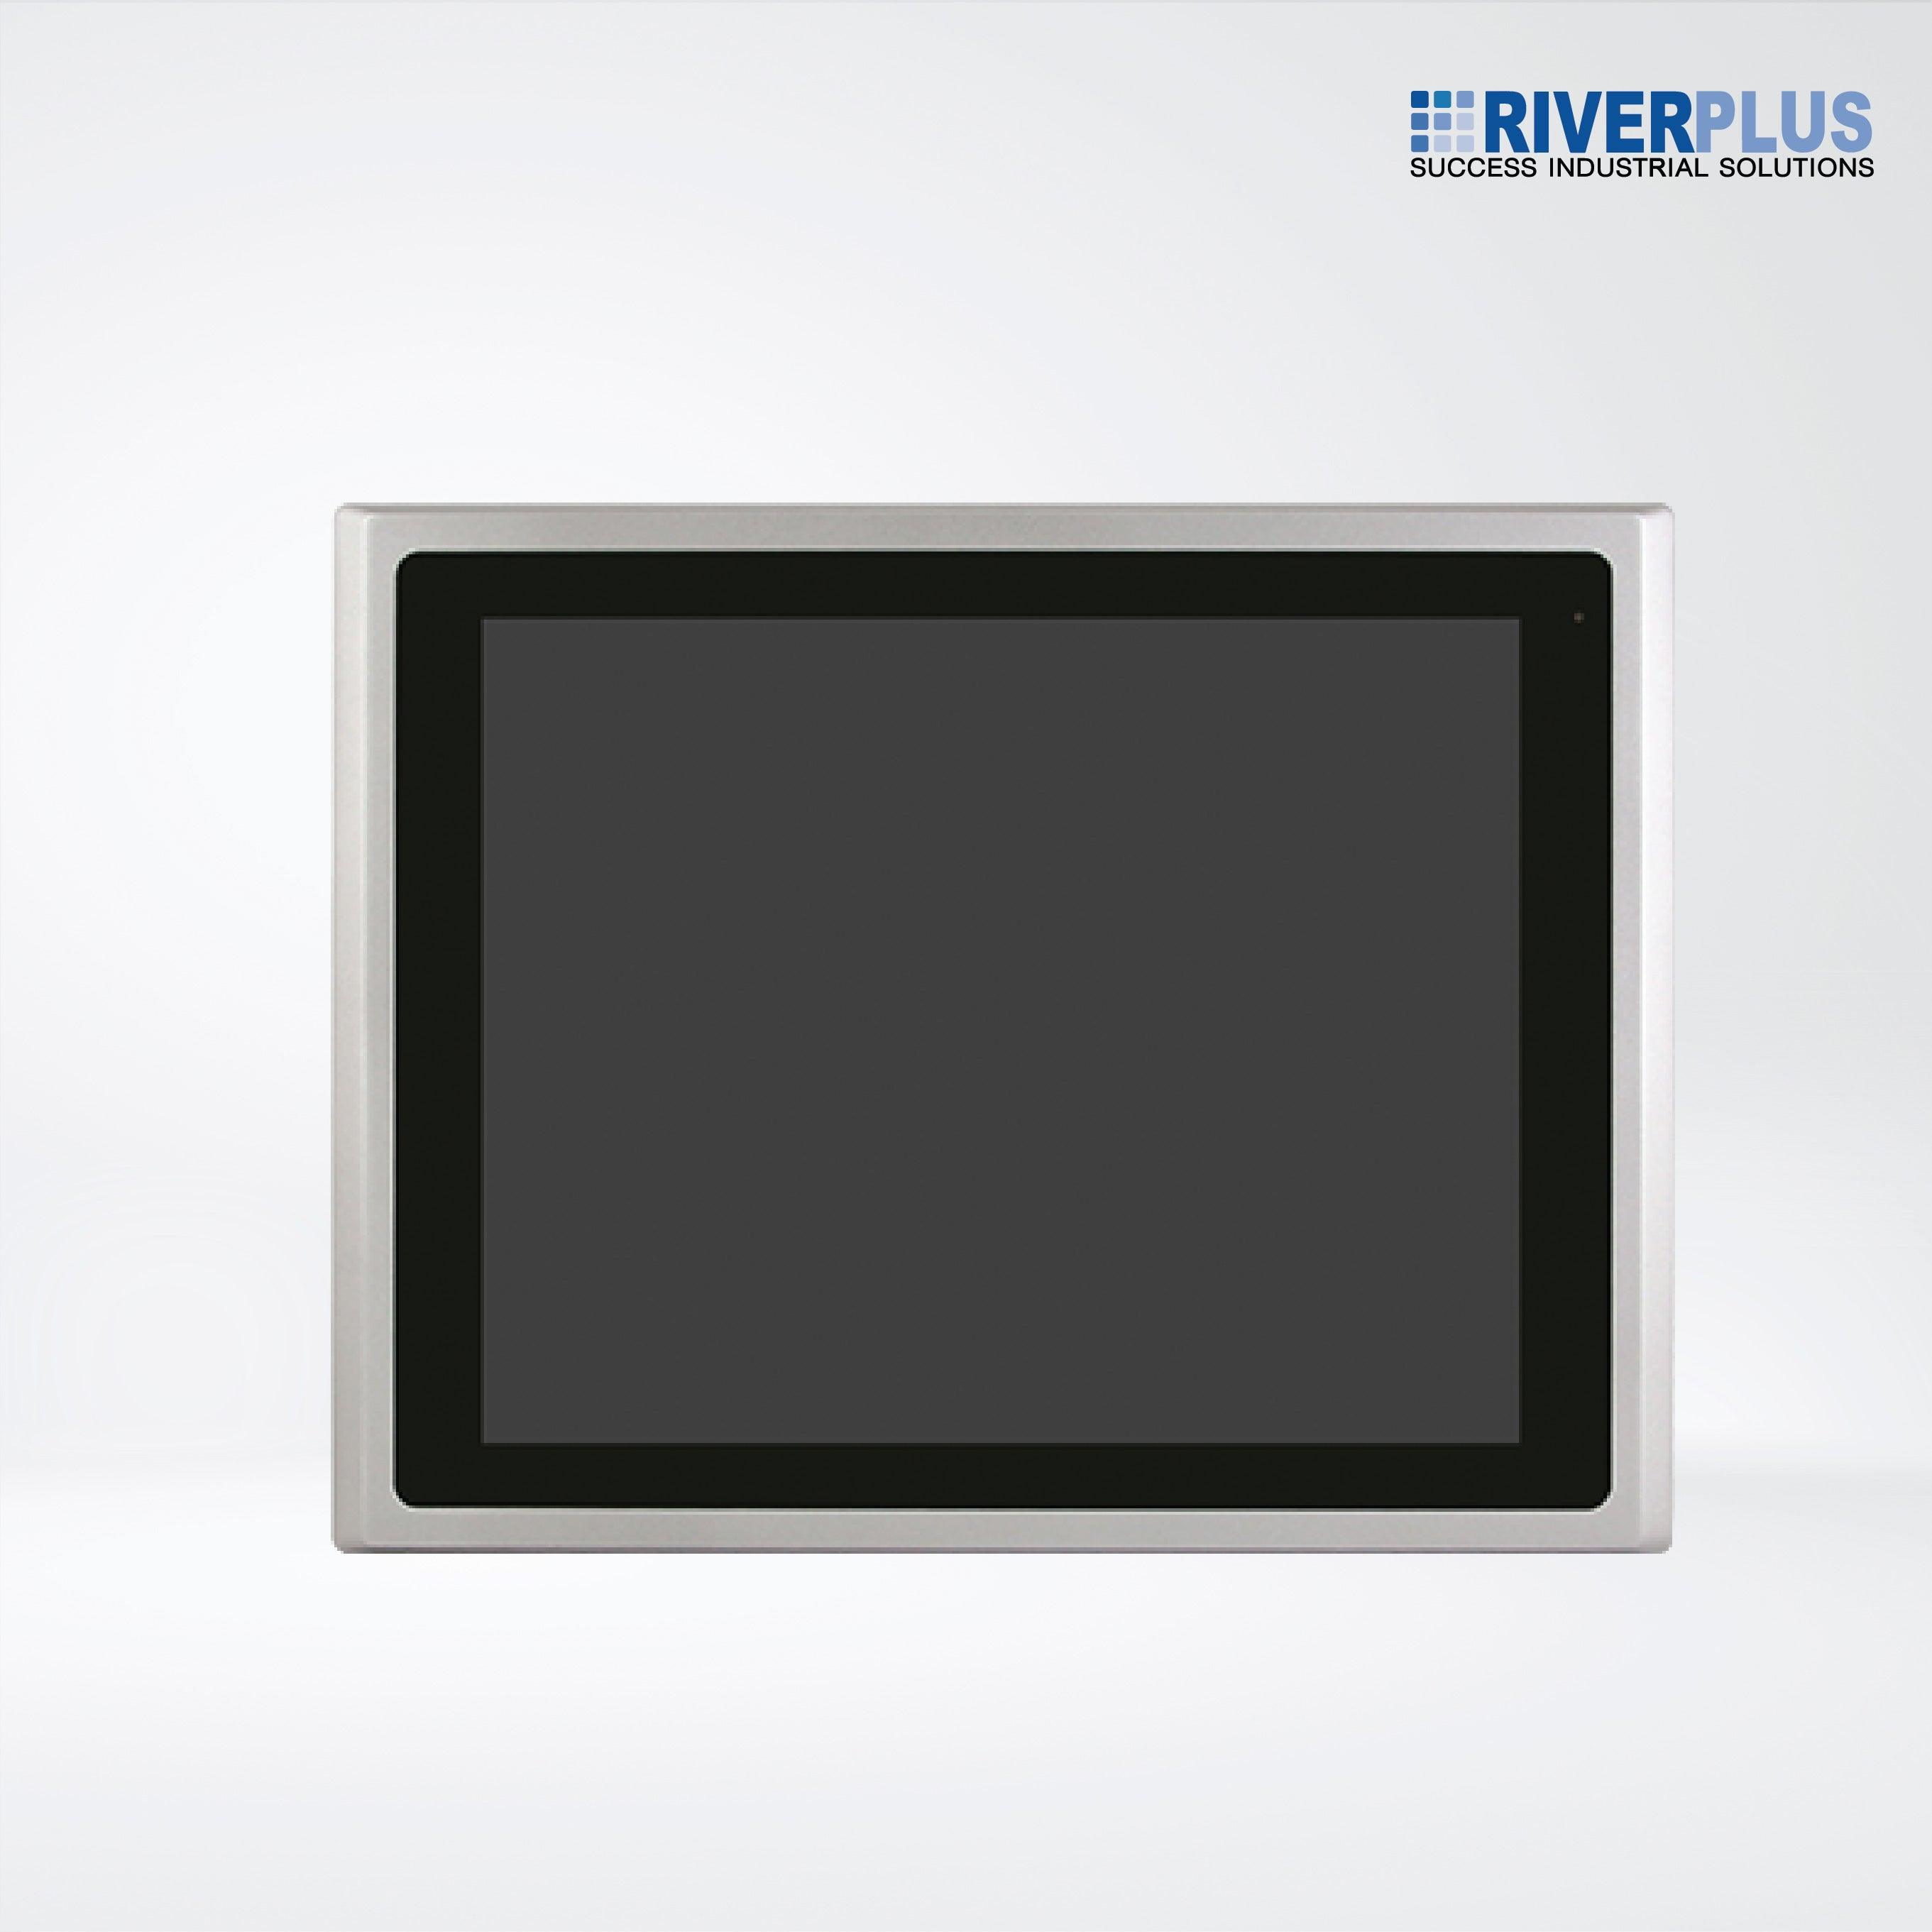 ARCHMI-817P 17" Intel Celeron N2930/ Atom E3845, Fanless Industrial Compact Size Panel PC - Riverplus